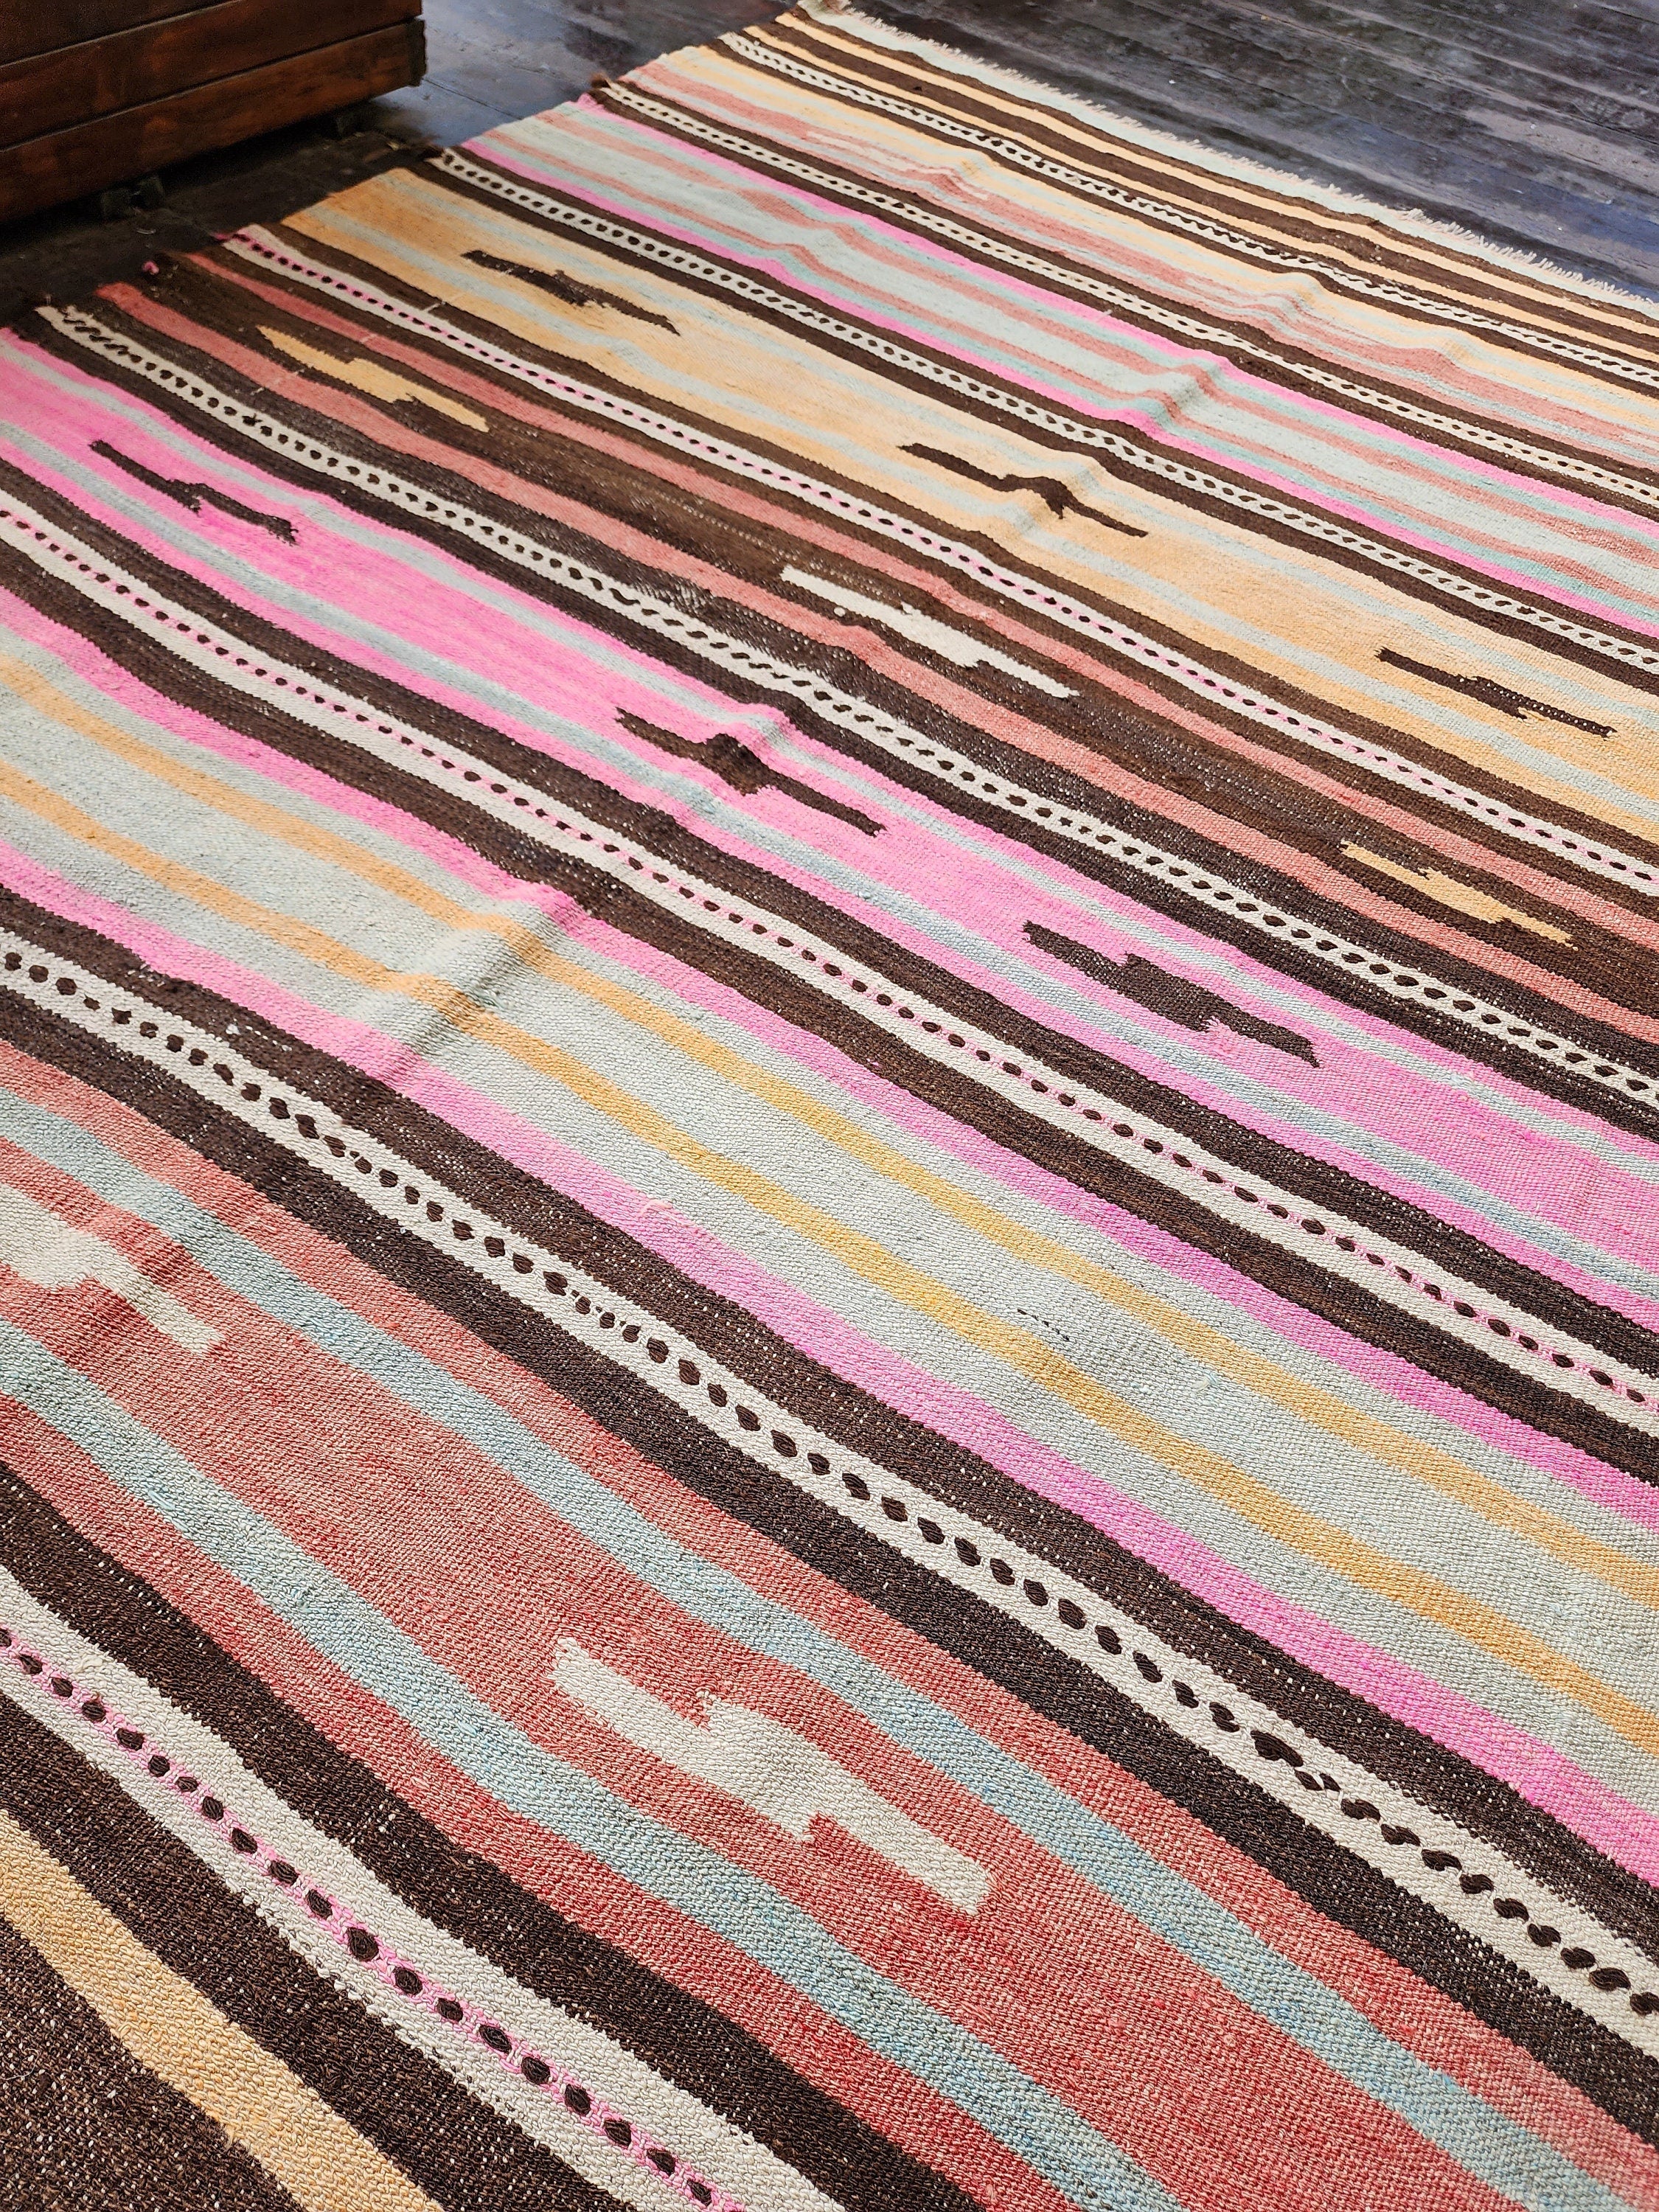 Tribal Kilim Rug, Living Room Rug, Rustic Rug, Organic Wool Rug, Antique Rugs, Ethnic BohoOrange and Green Cicim Persian Area Rug 8.4*6ft